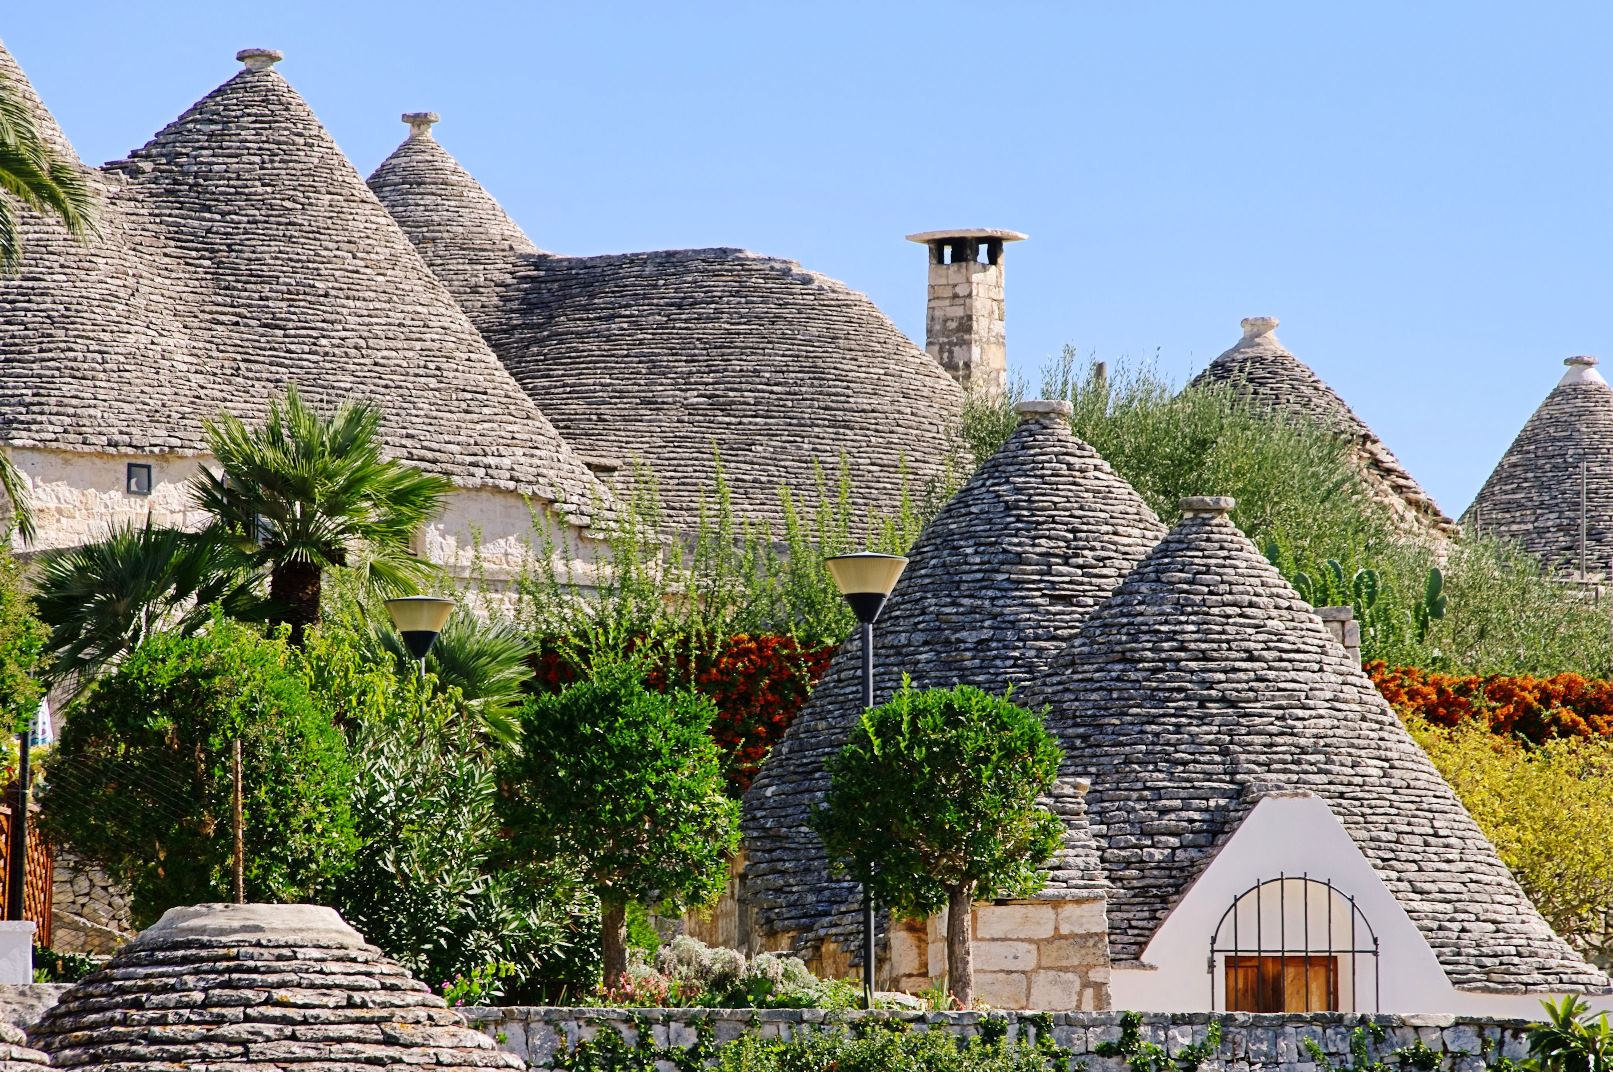 Trulli roofs at Puglia, Italy